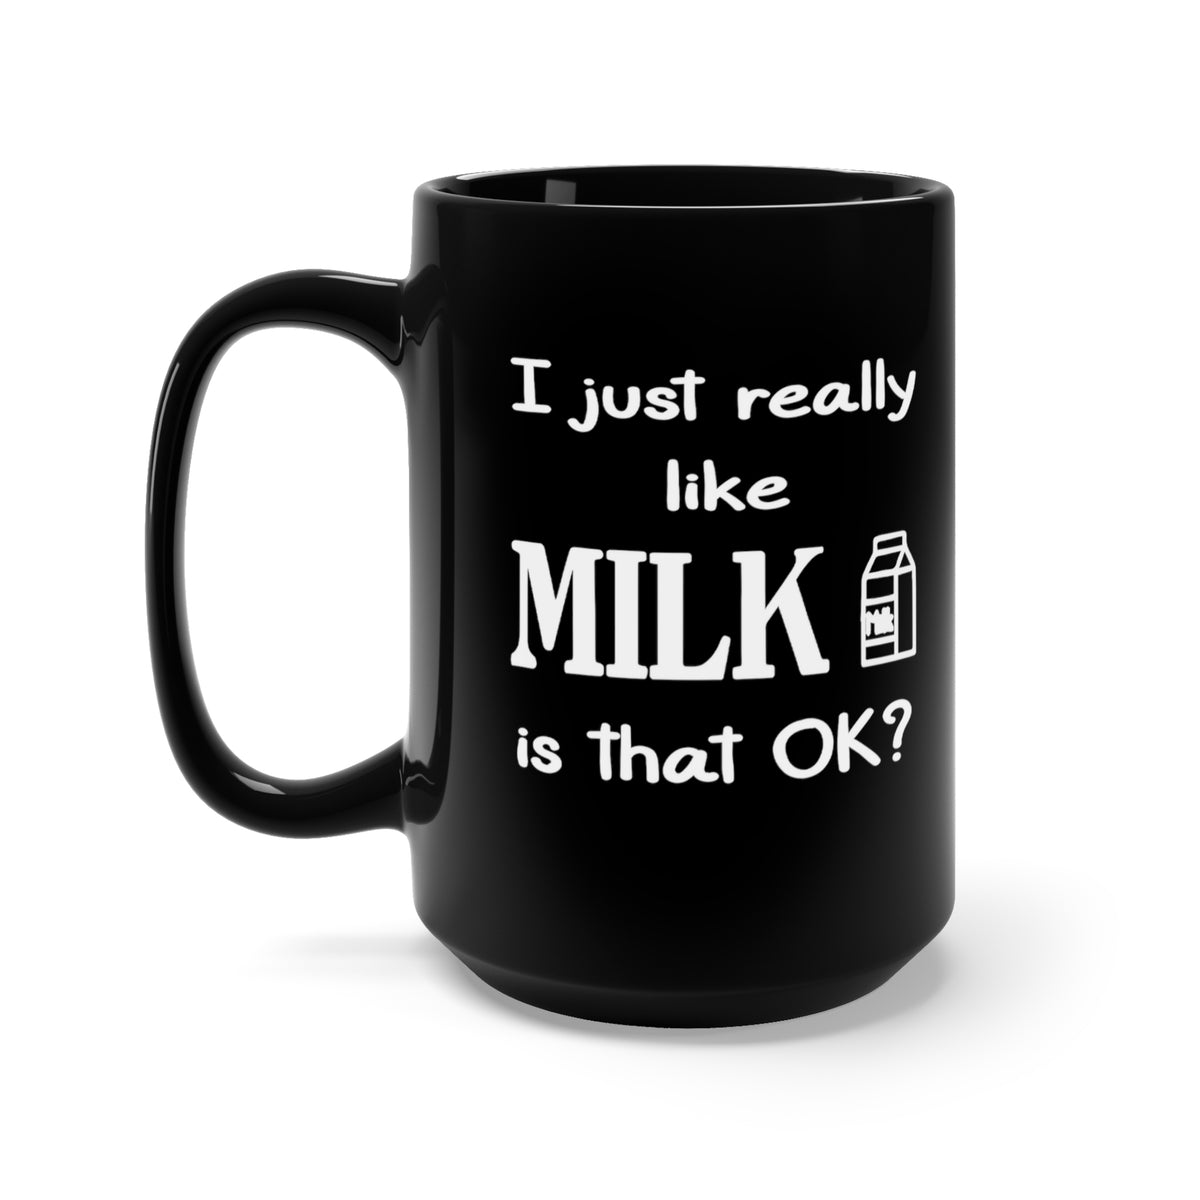 Funny Black Mug For Milk Lovers - Birthday Present - Christmas Gift - Ceramic 15oz